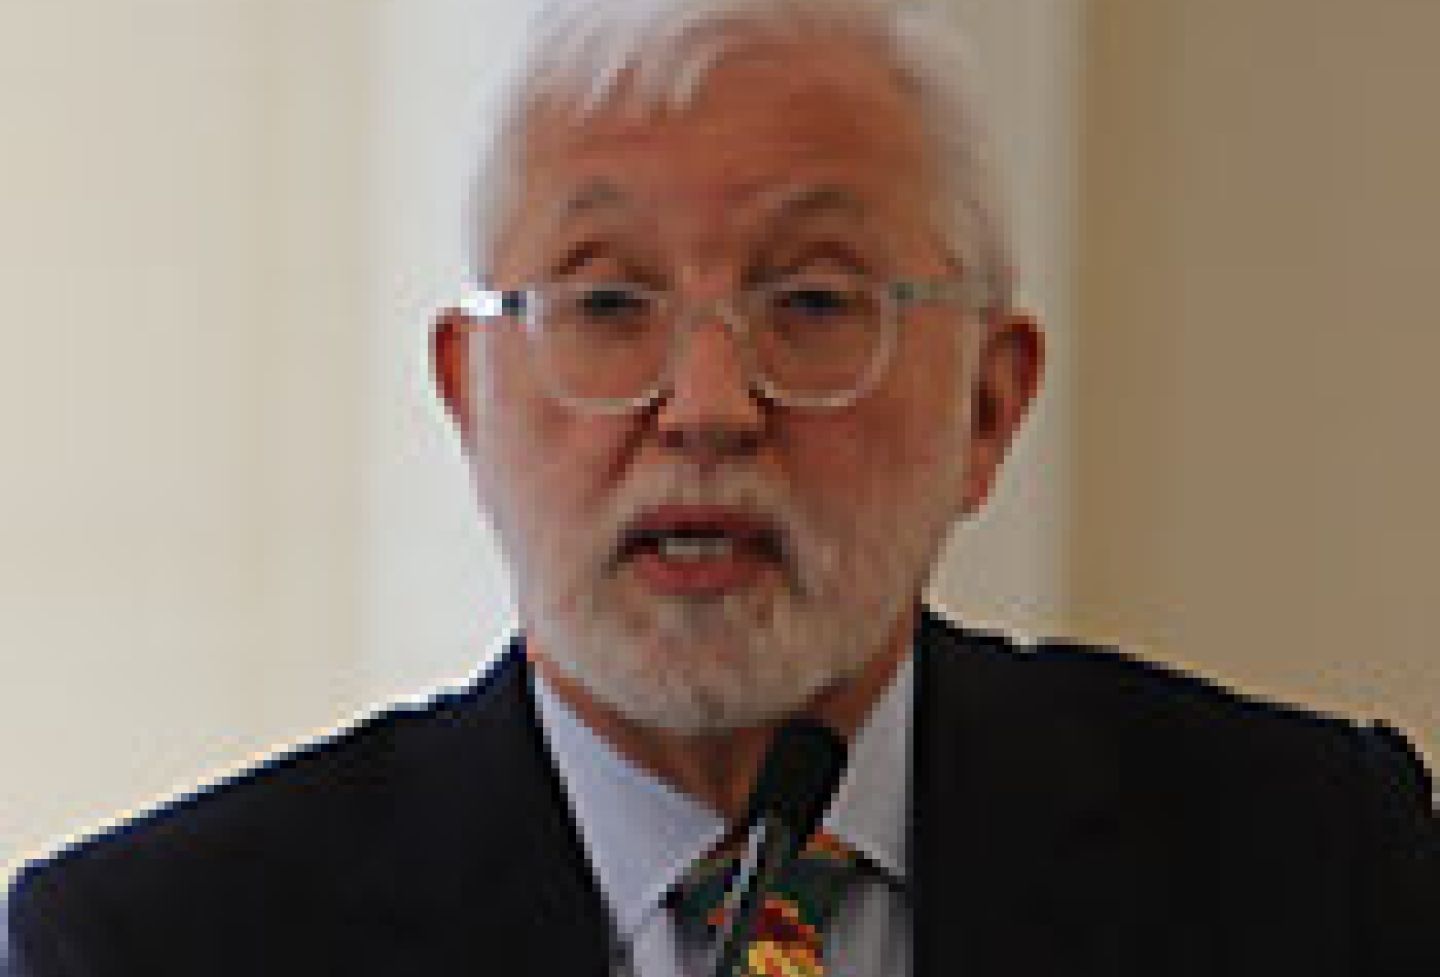 U.S. Judge Jed Rakoff